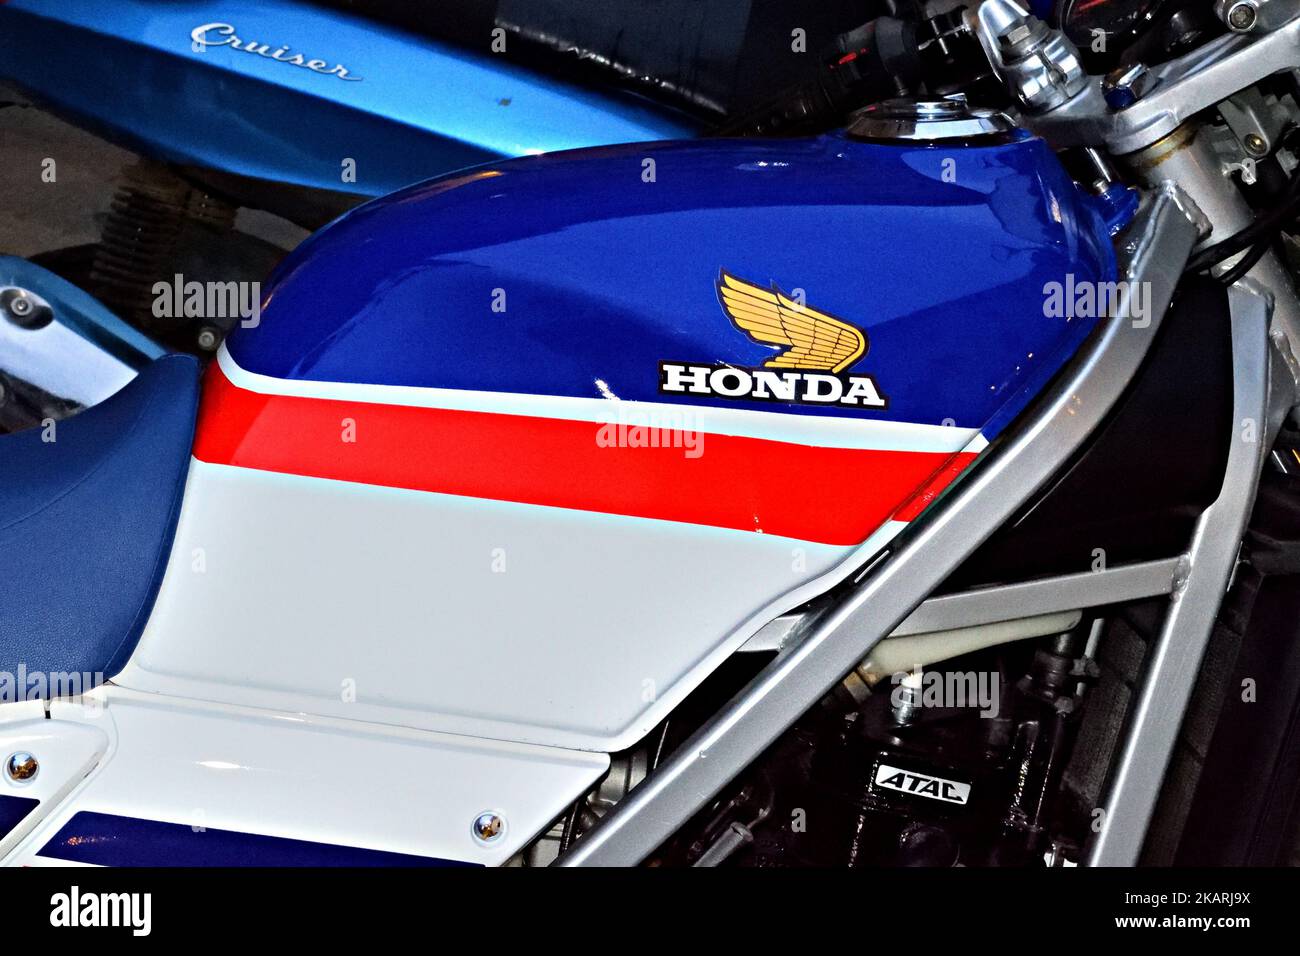 Honda NS 125 motorcycle tank of the 80s made by the famous Japanese company Honda Motor Stock Photo